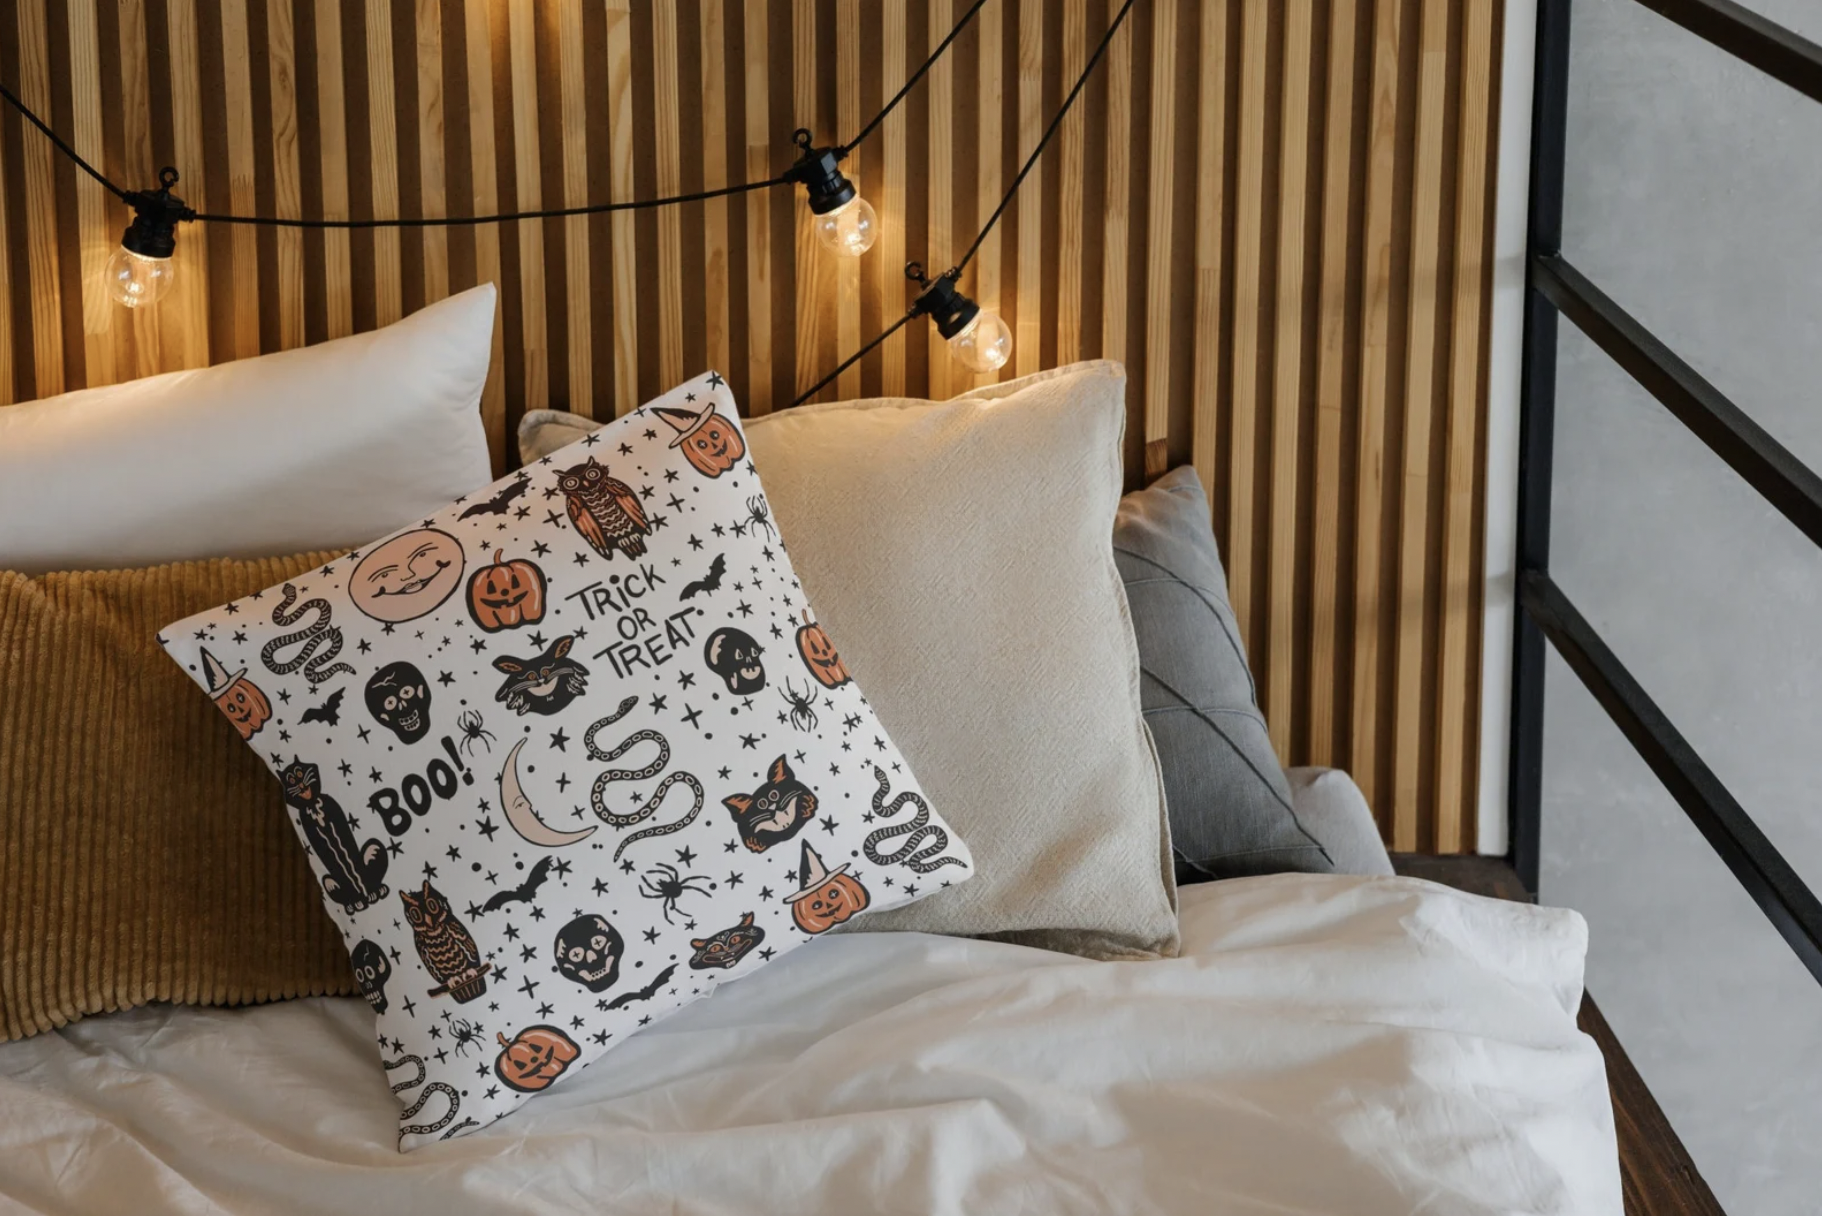 C&F Home 8 x 8 Jack-O-Lantern Petite Hooked Halloween Throw Pillow